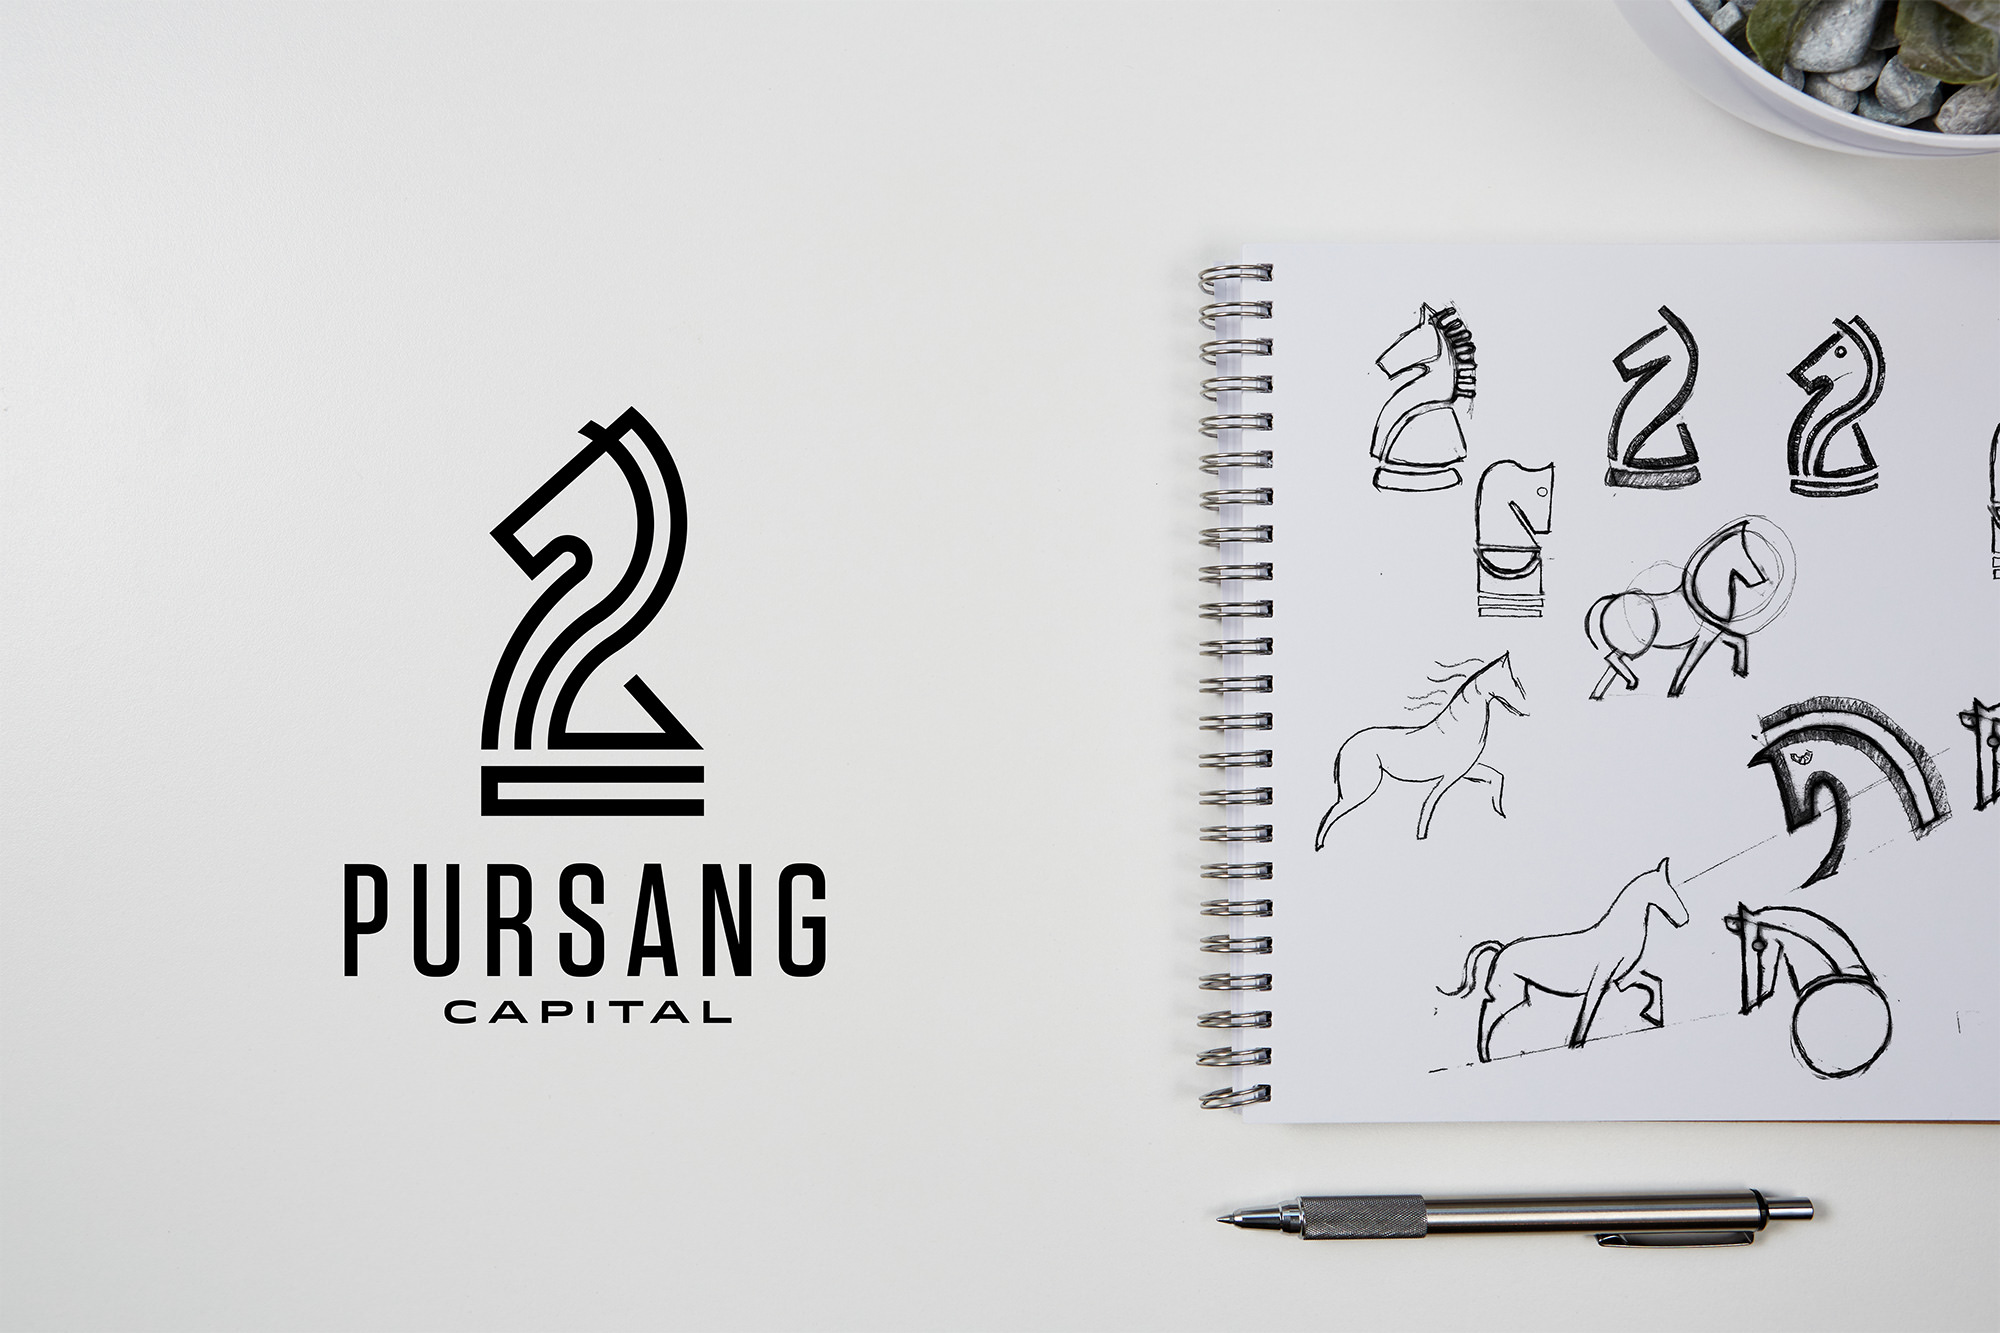 Pursang Capital